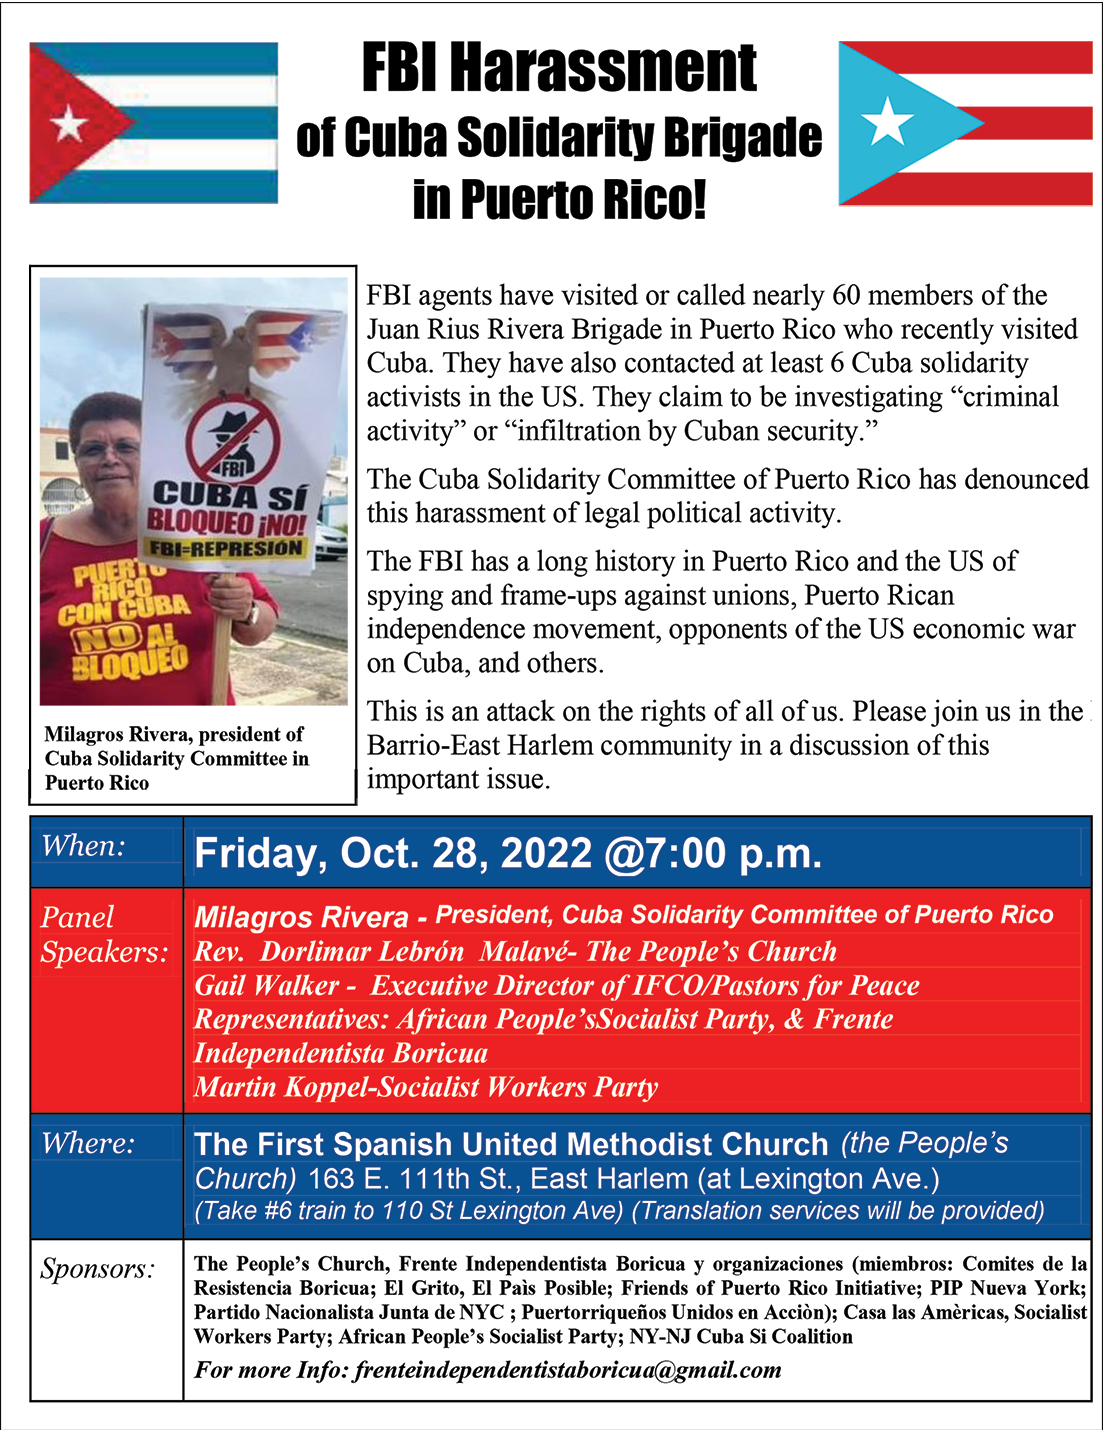 FBI Harassment of Cuba Solidarity Brigade in Puerto Rico – Event Discussions